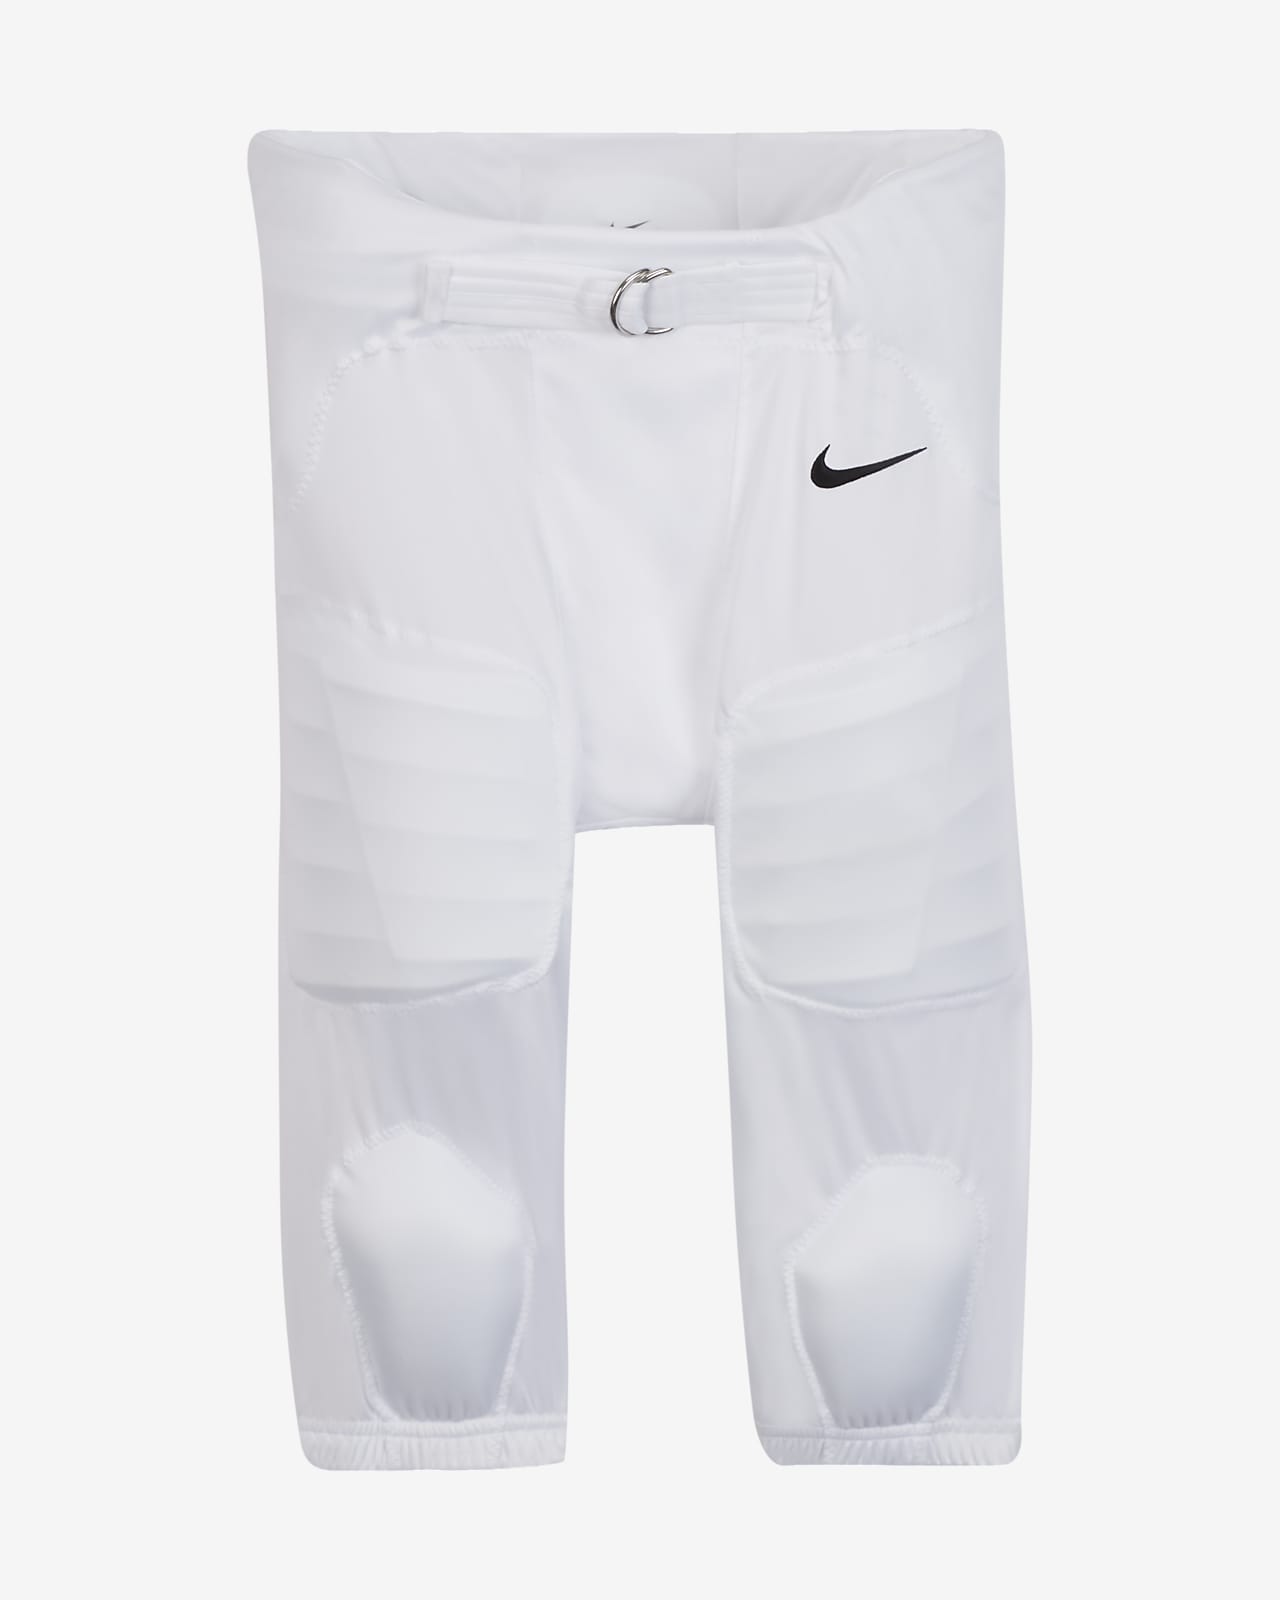 Pantalones de fútbol para niños talla grande Nike 3.0. Nike.com